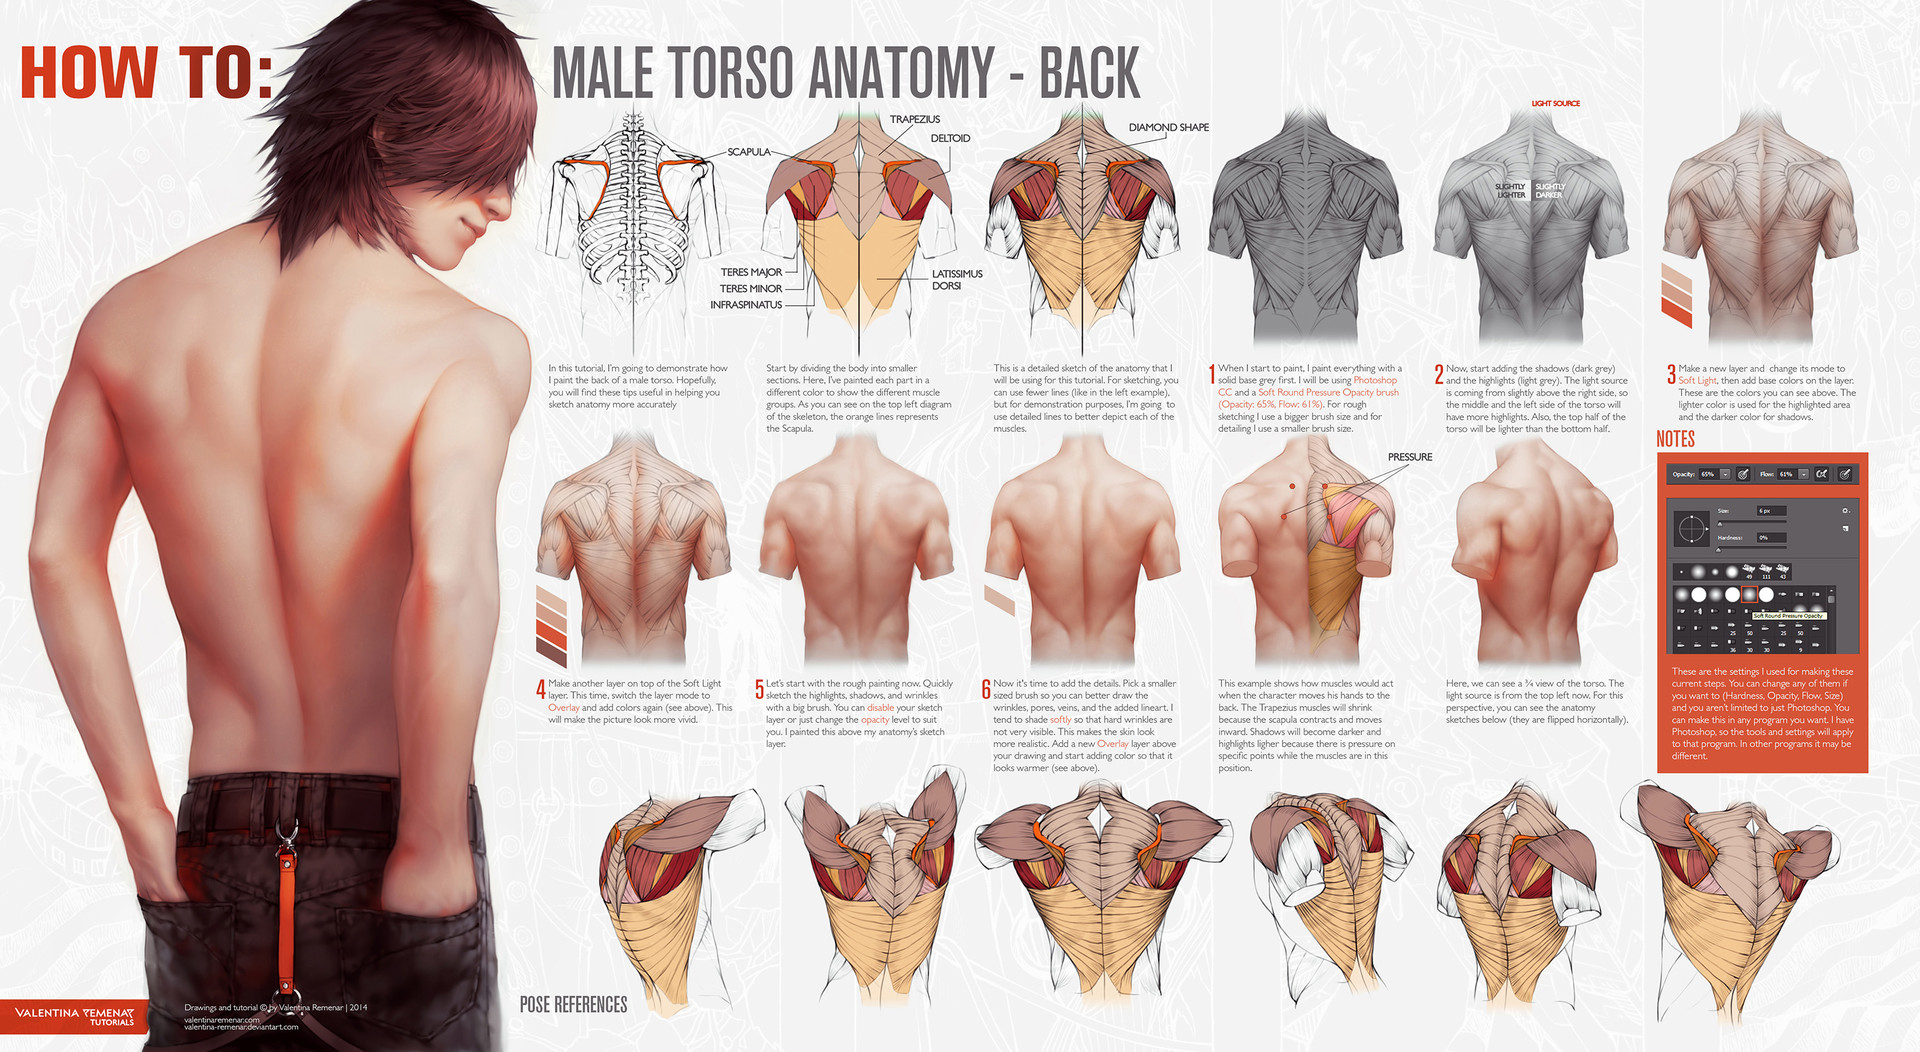 Male Torso Anatomy and Hand References.